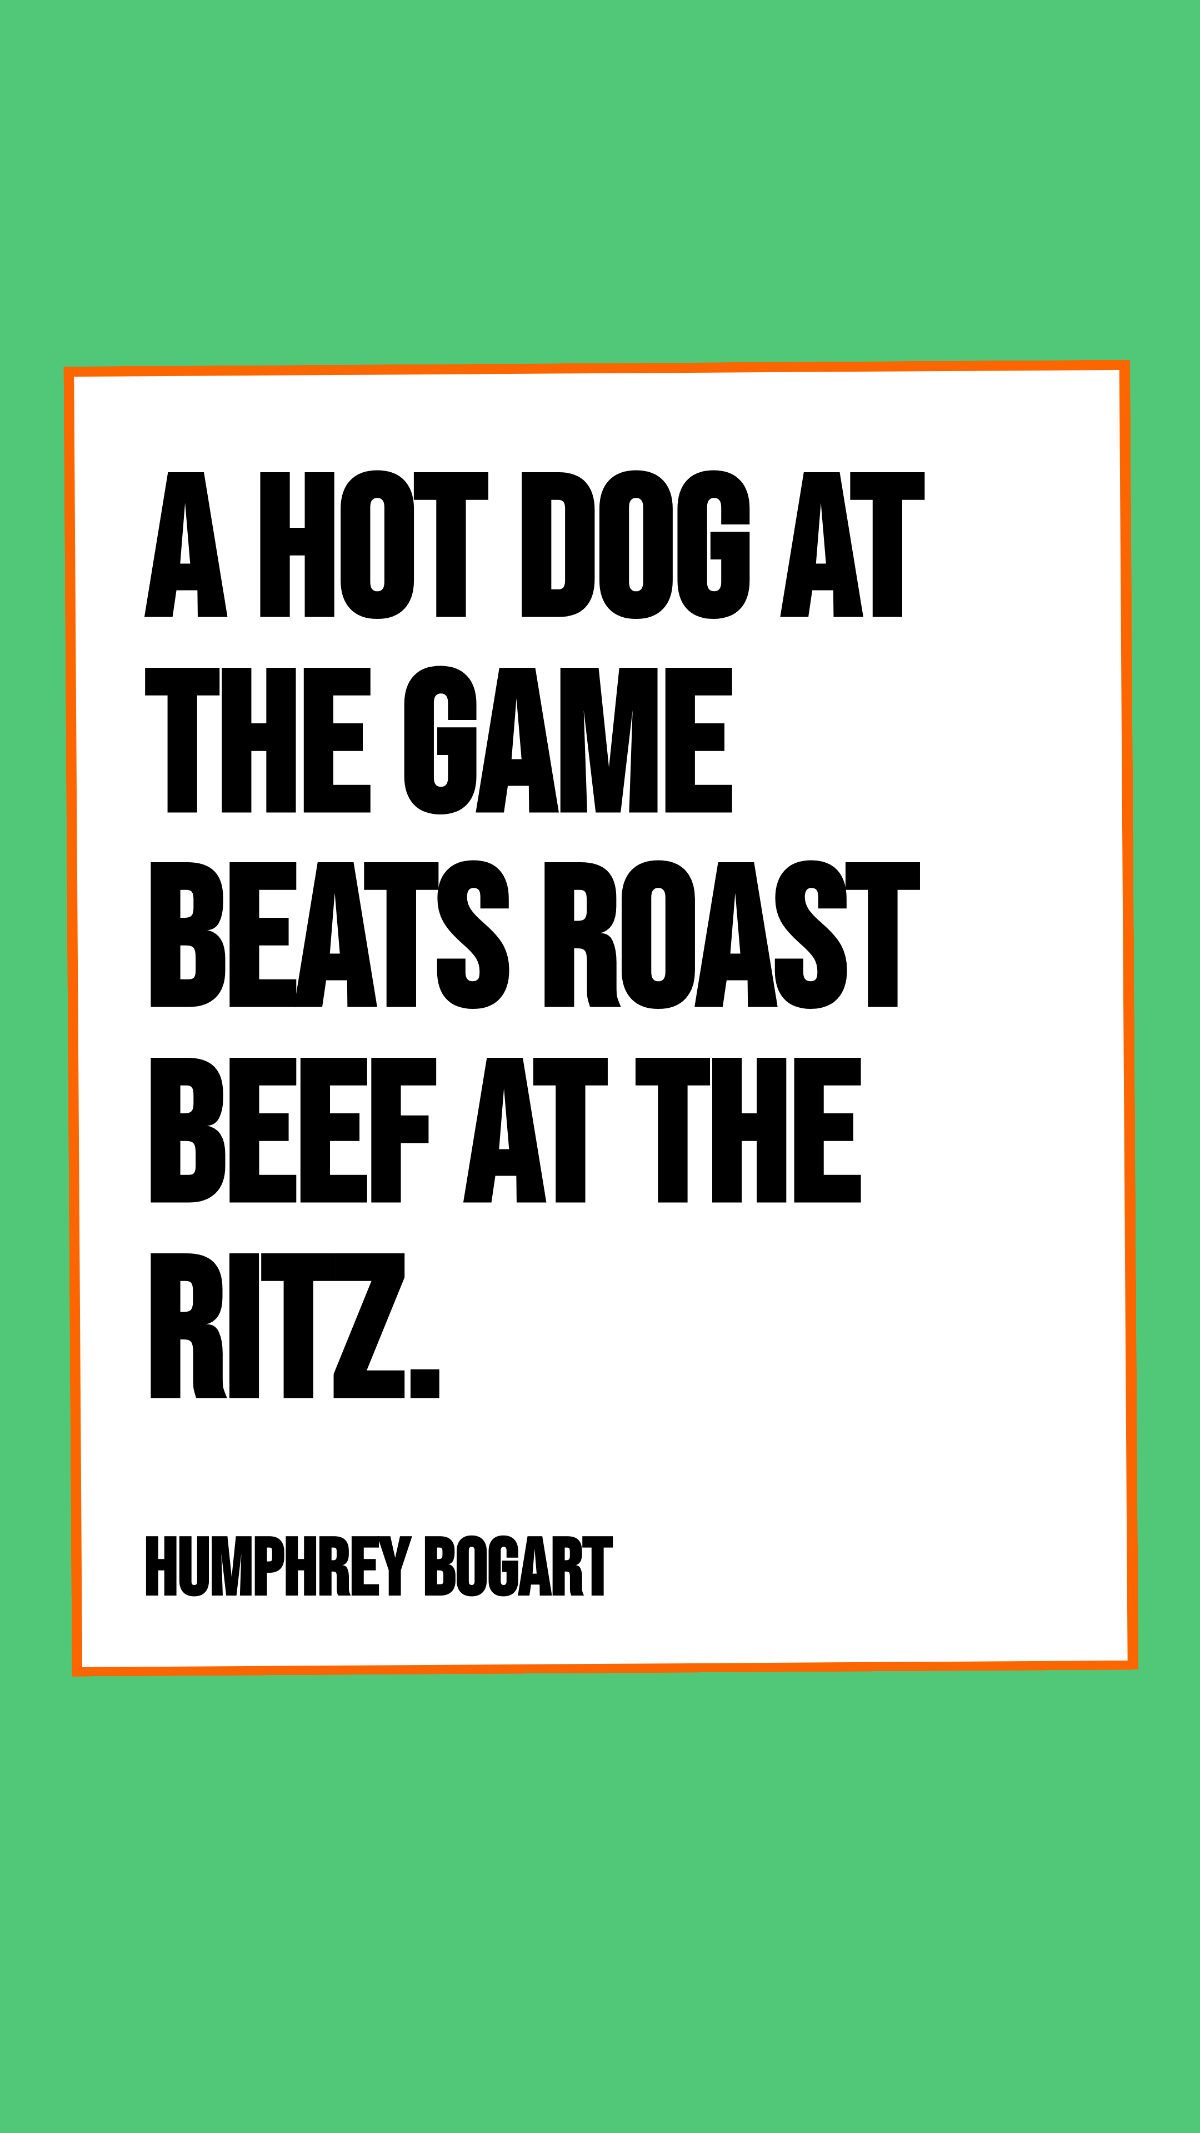 Humphrey Bogart - A hot dog at the game beats roast beef at the Ritz.